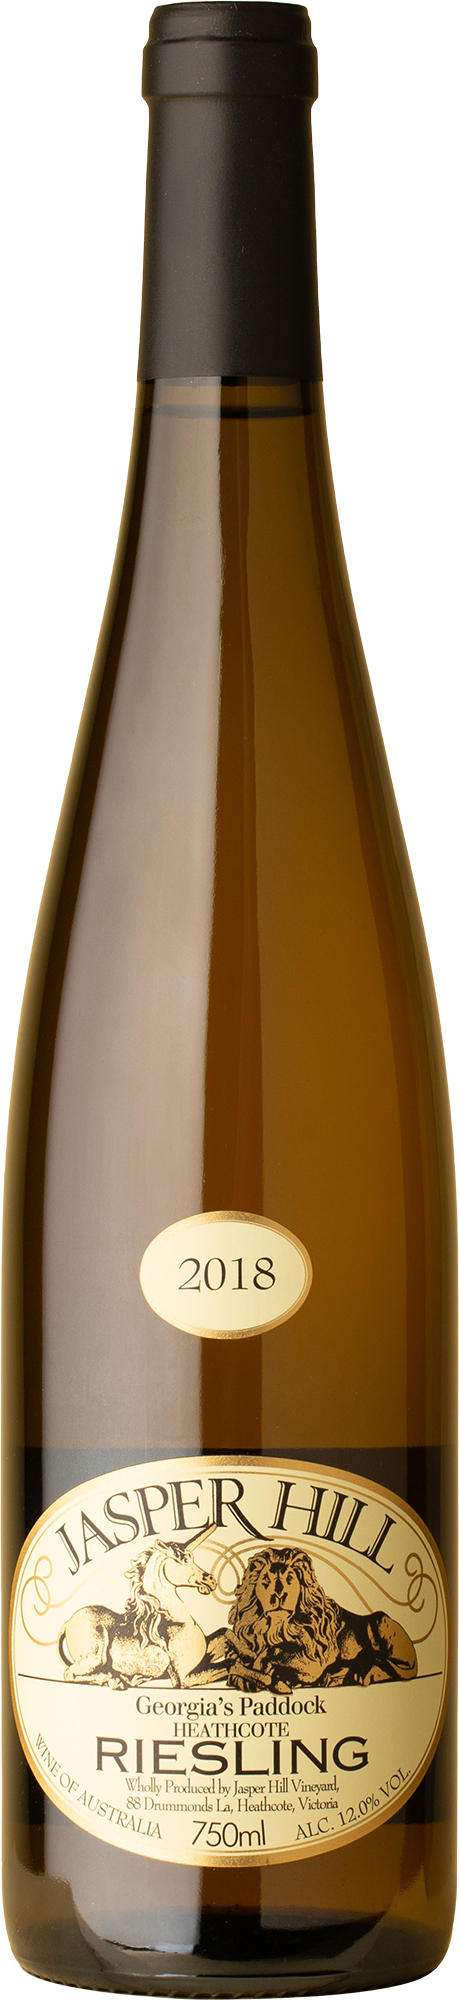 Jasper Hill - Georgia's Paddock Riesling 2018 White Wine